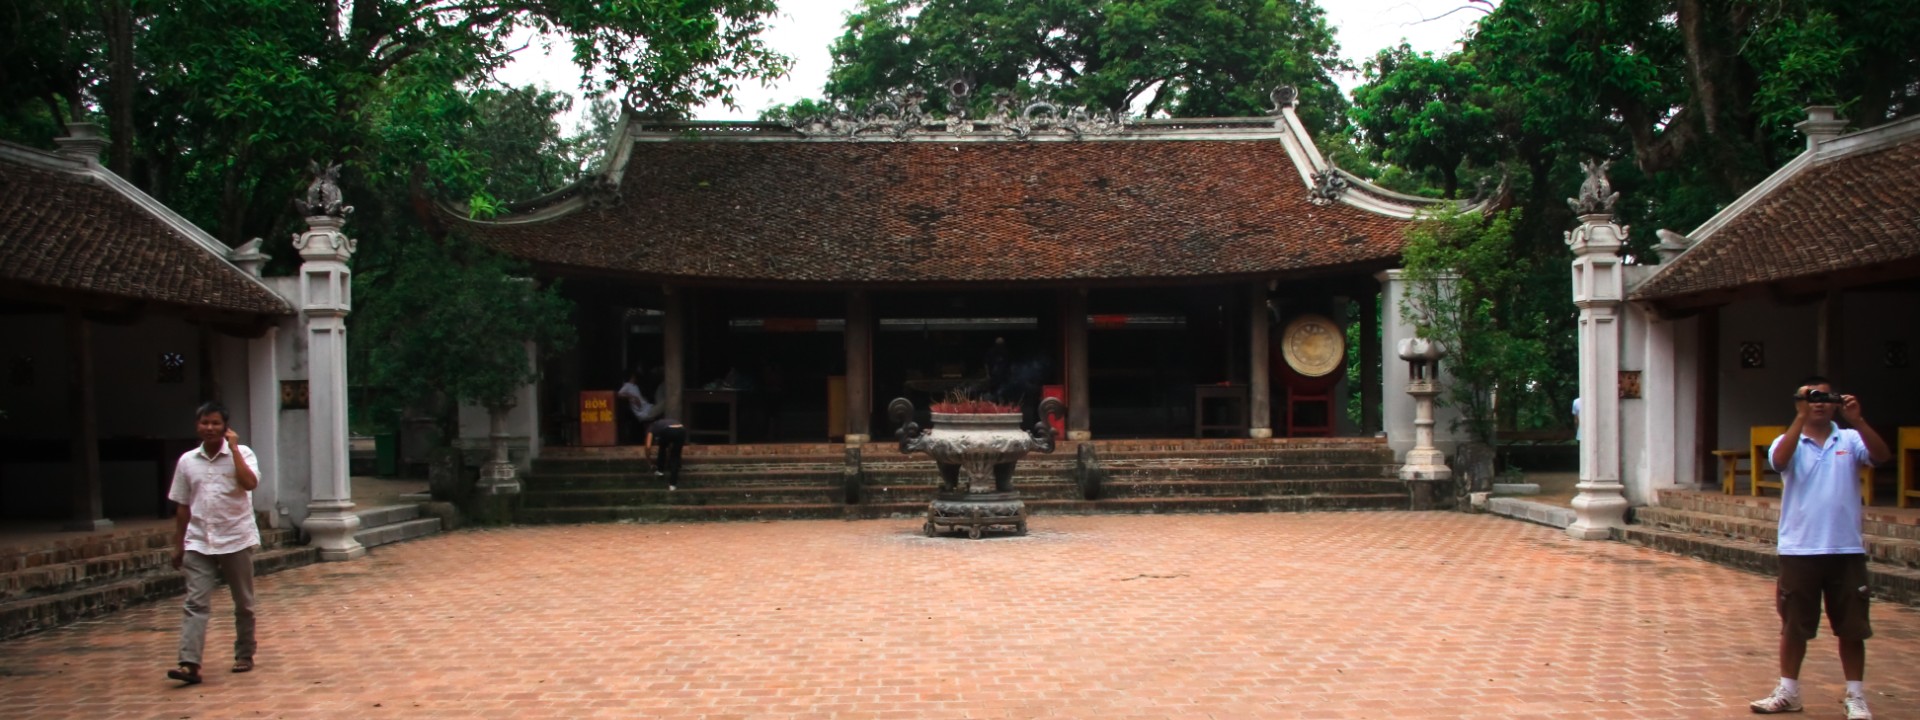 La aldea antigua Duong Lam